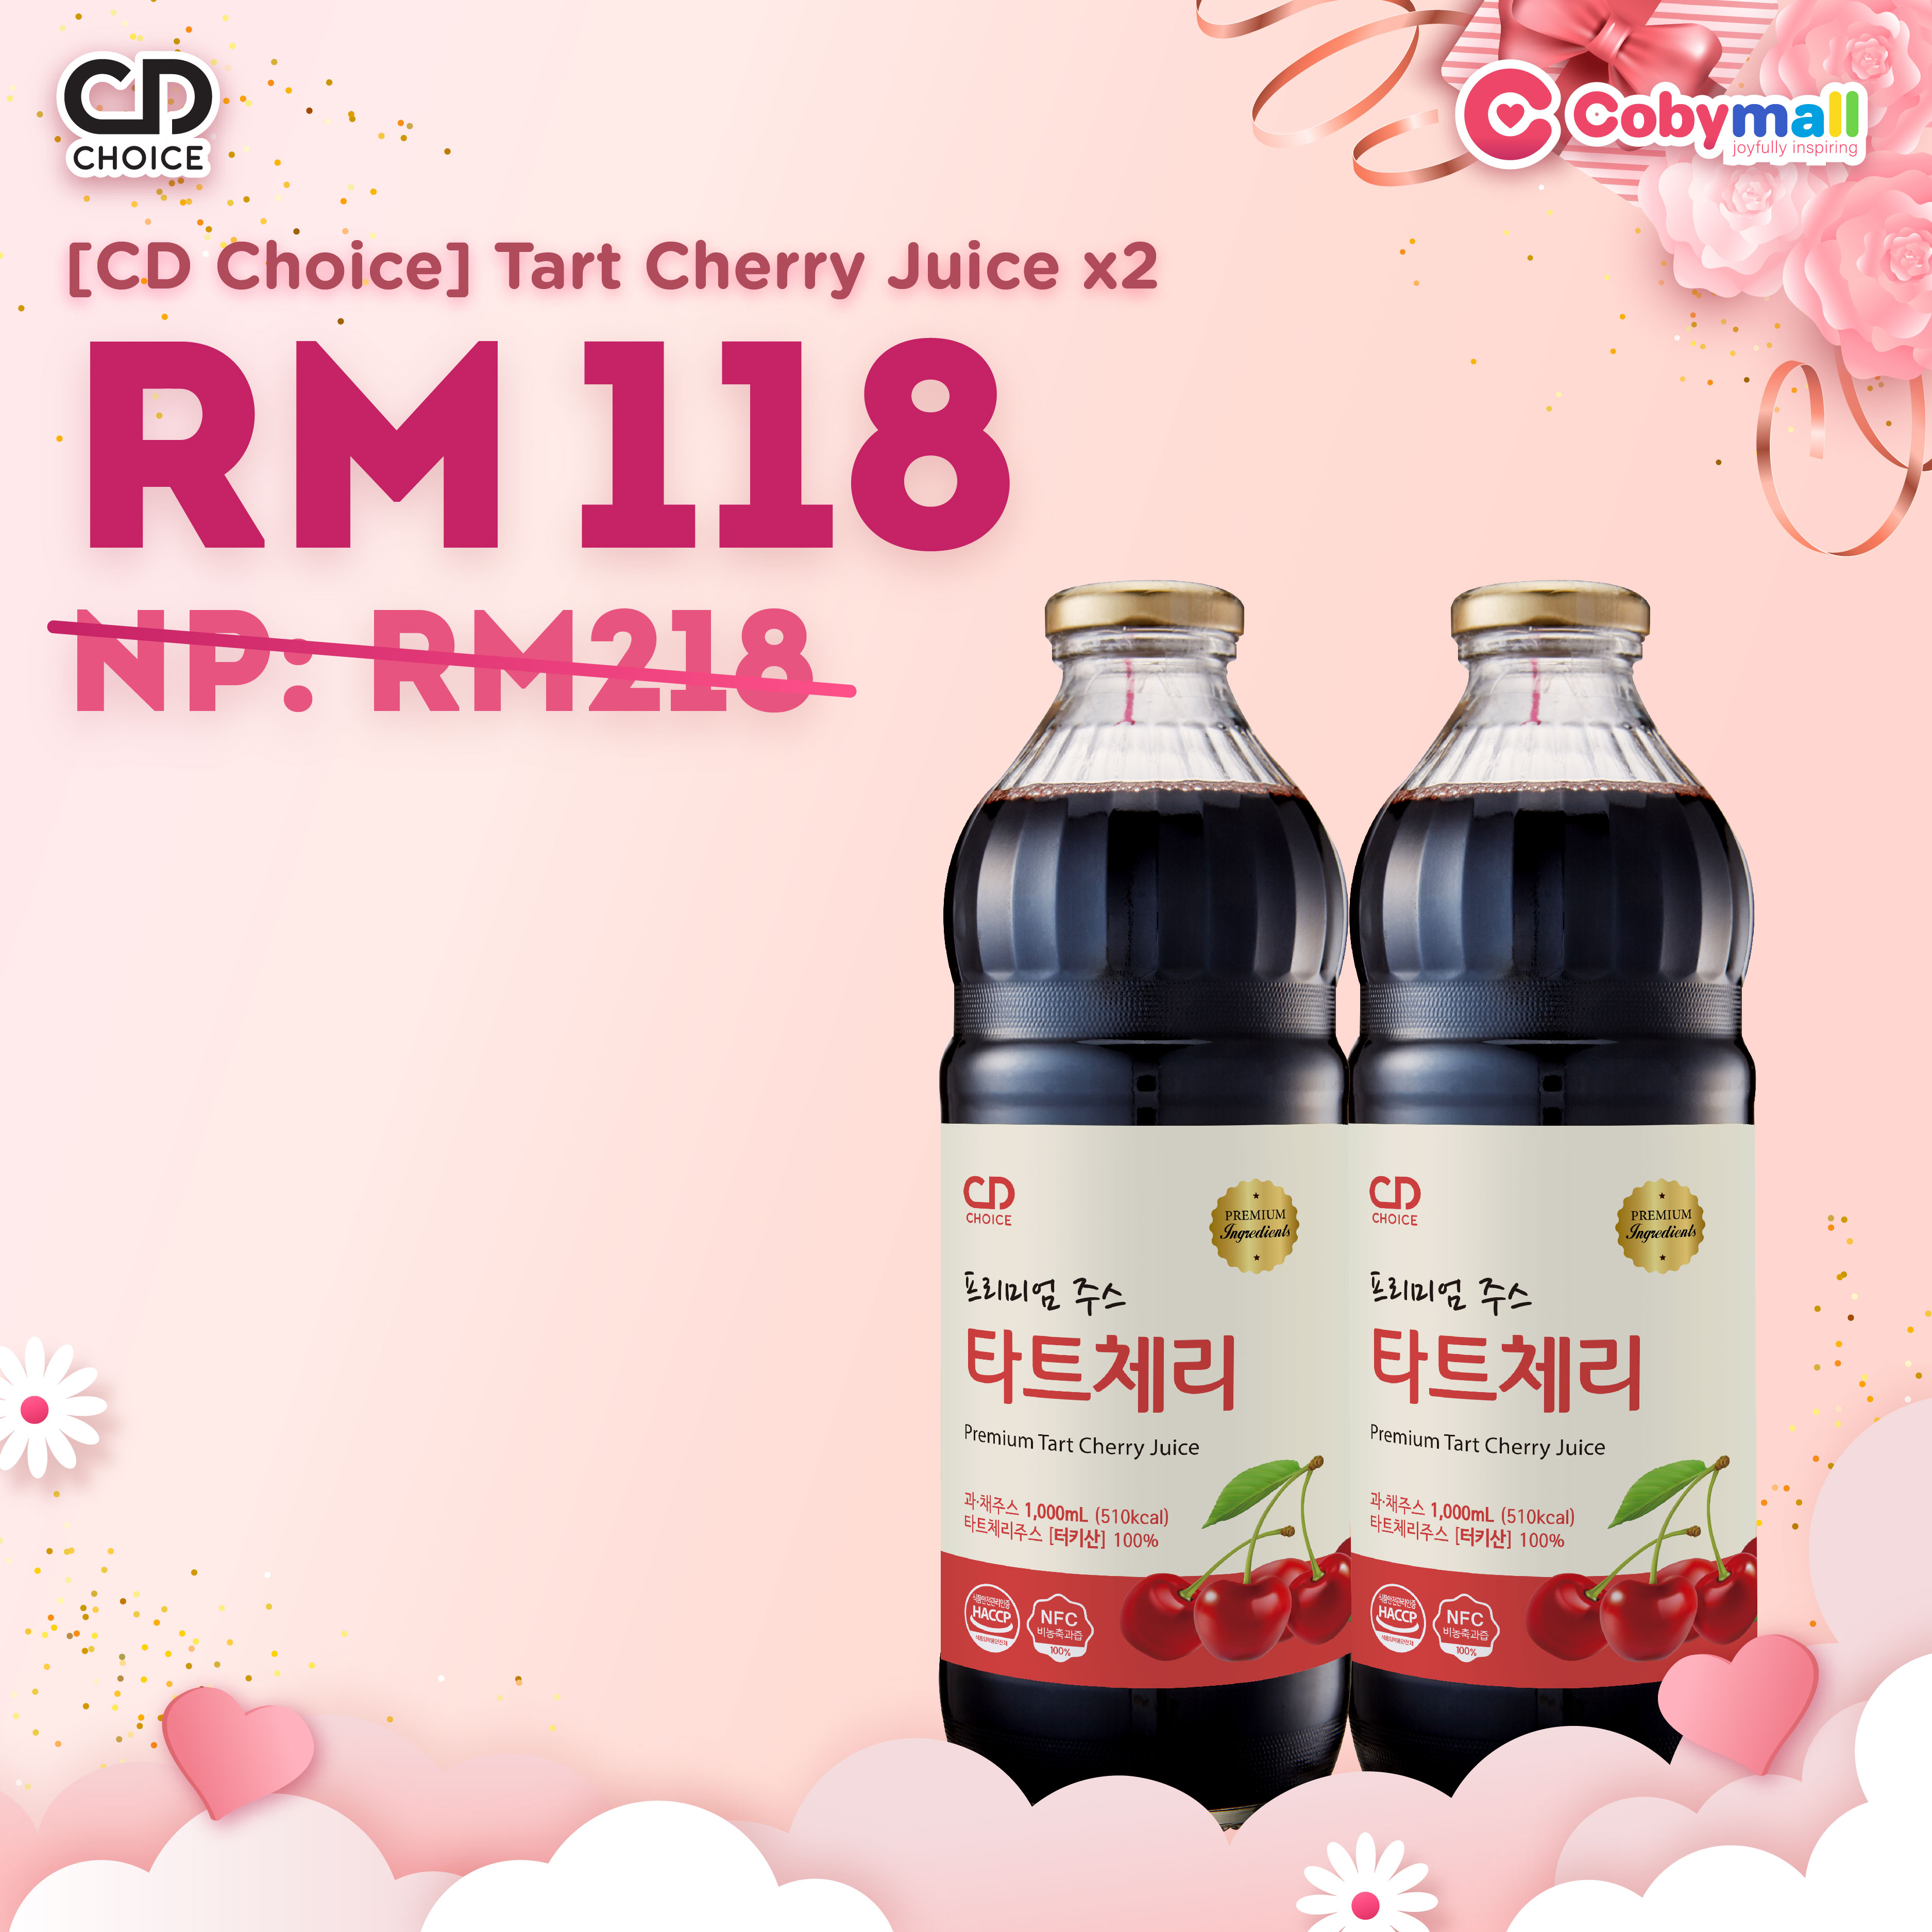 Mother's Day [CD Choice] Premium Tart Cherry Juice x2